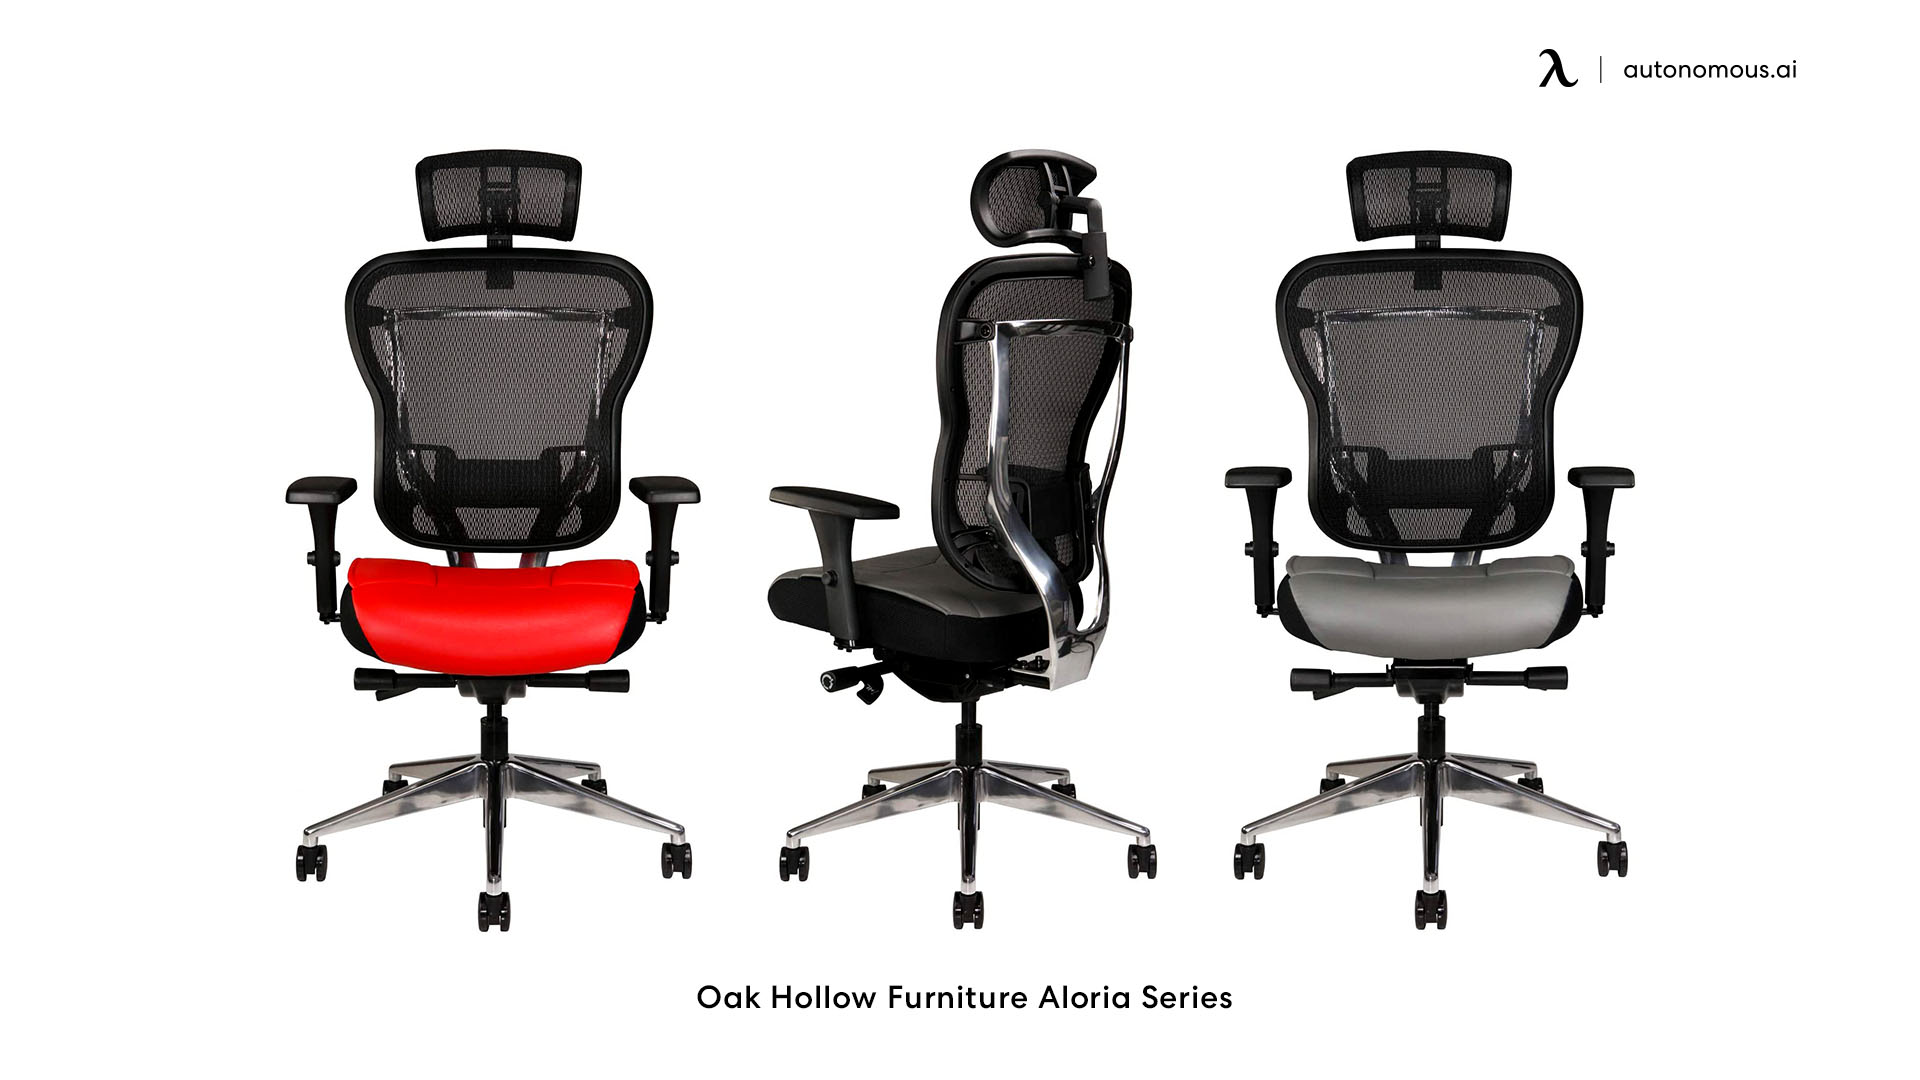 Oak Hollow Furniture Aloria Series rolling office chair